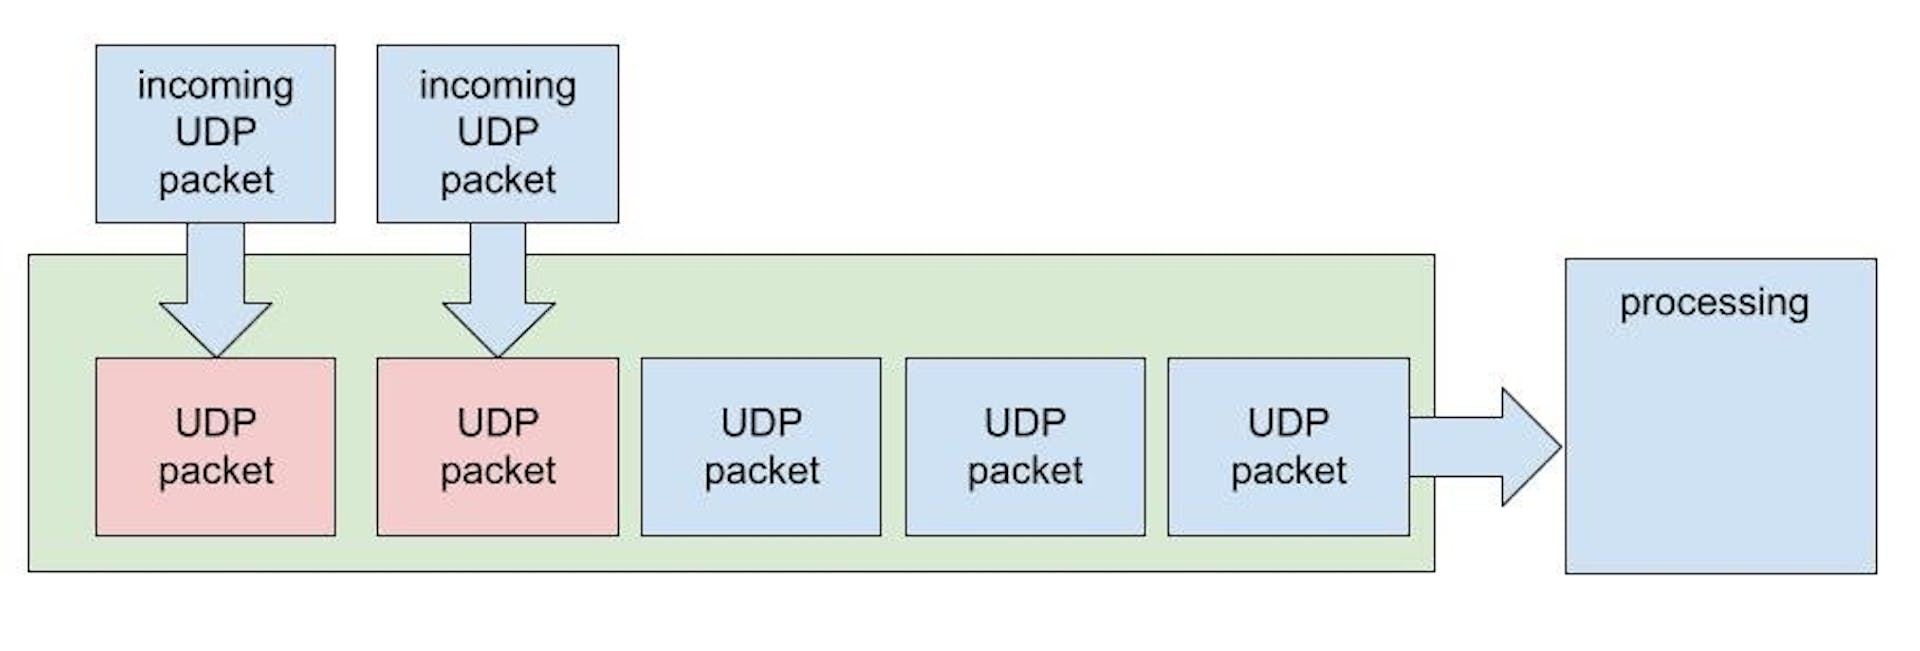 Linux UDP buffer overflow case - several processes